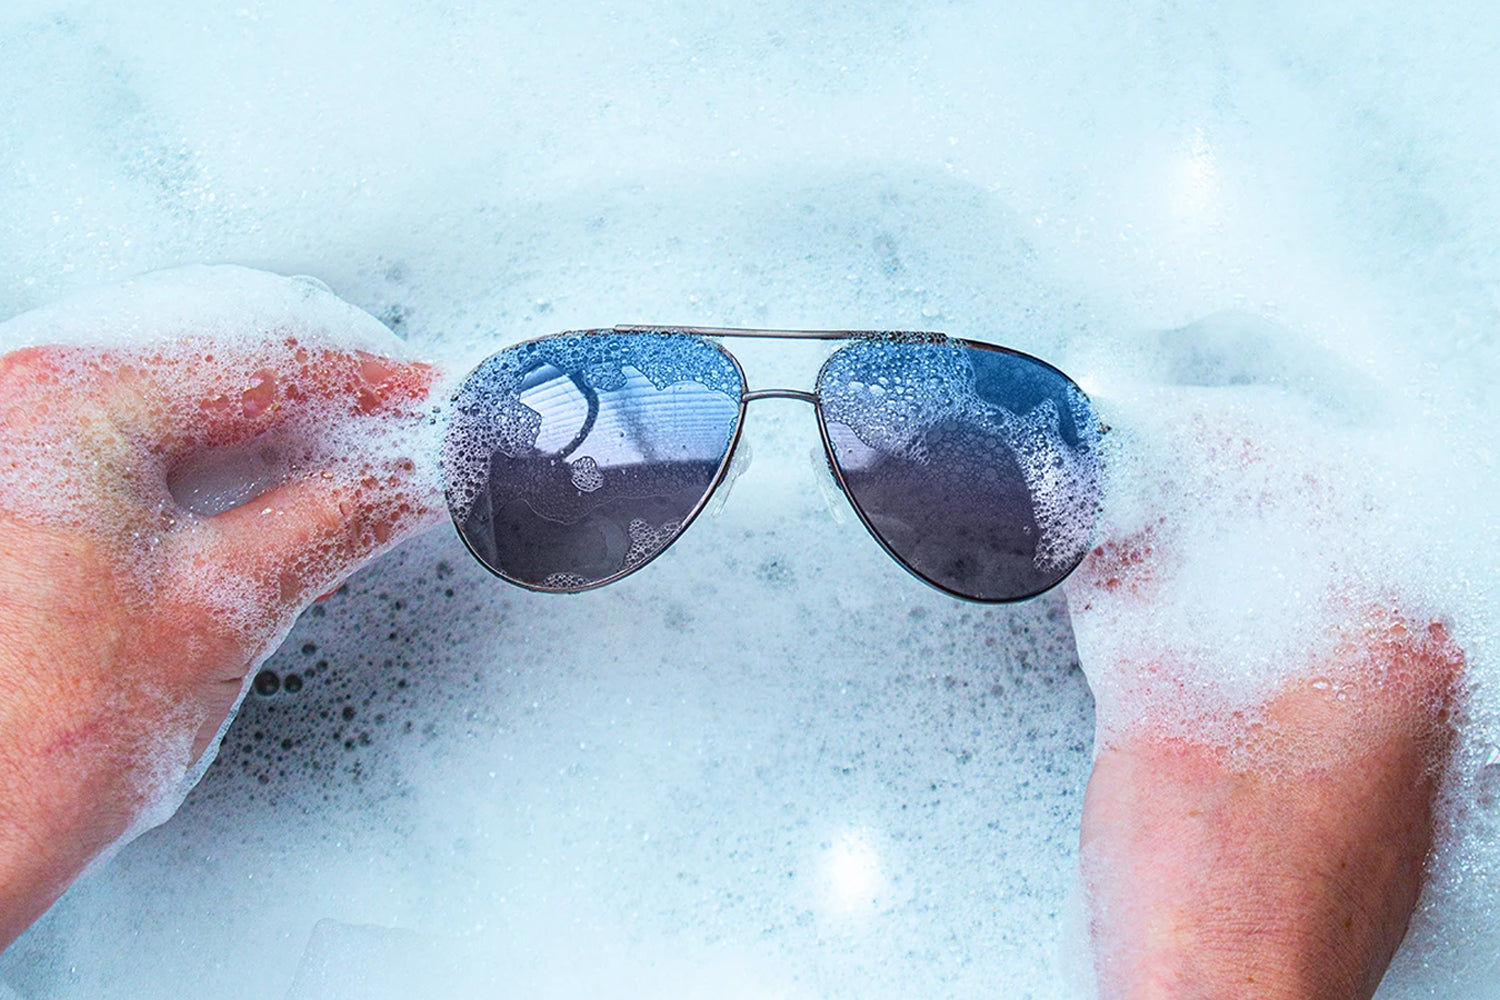 How To Wash Sunglasses